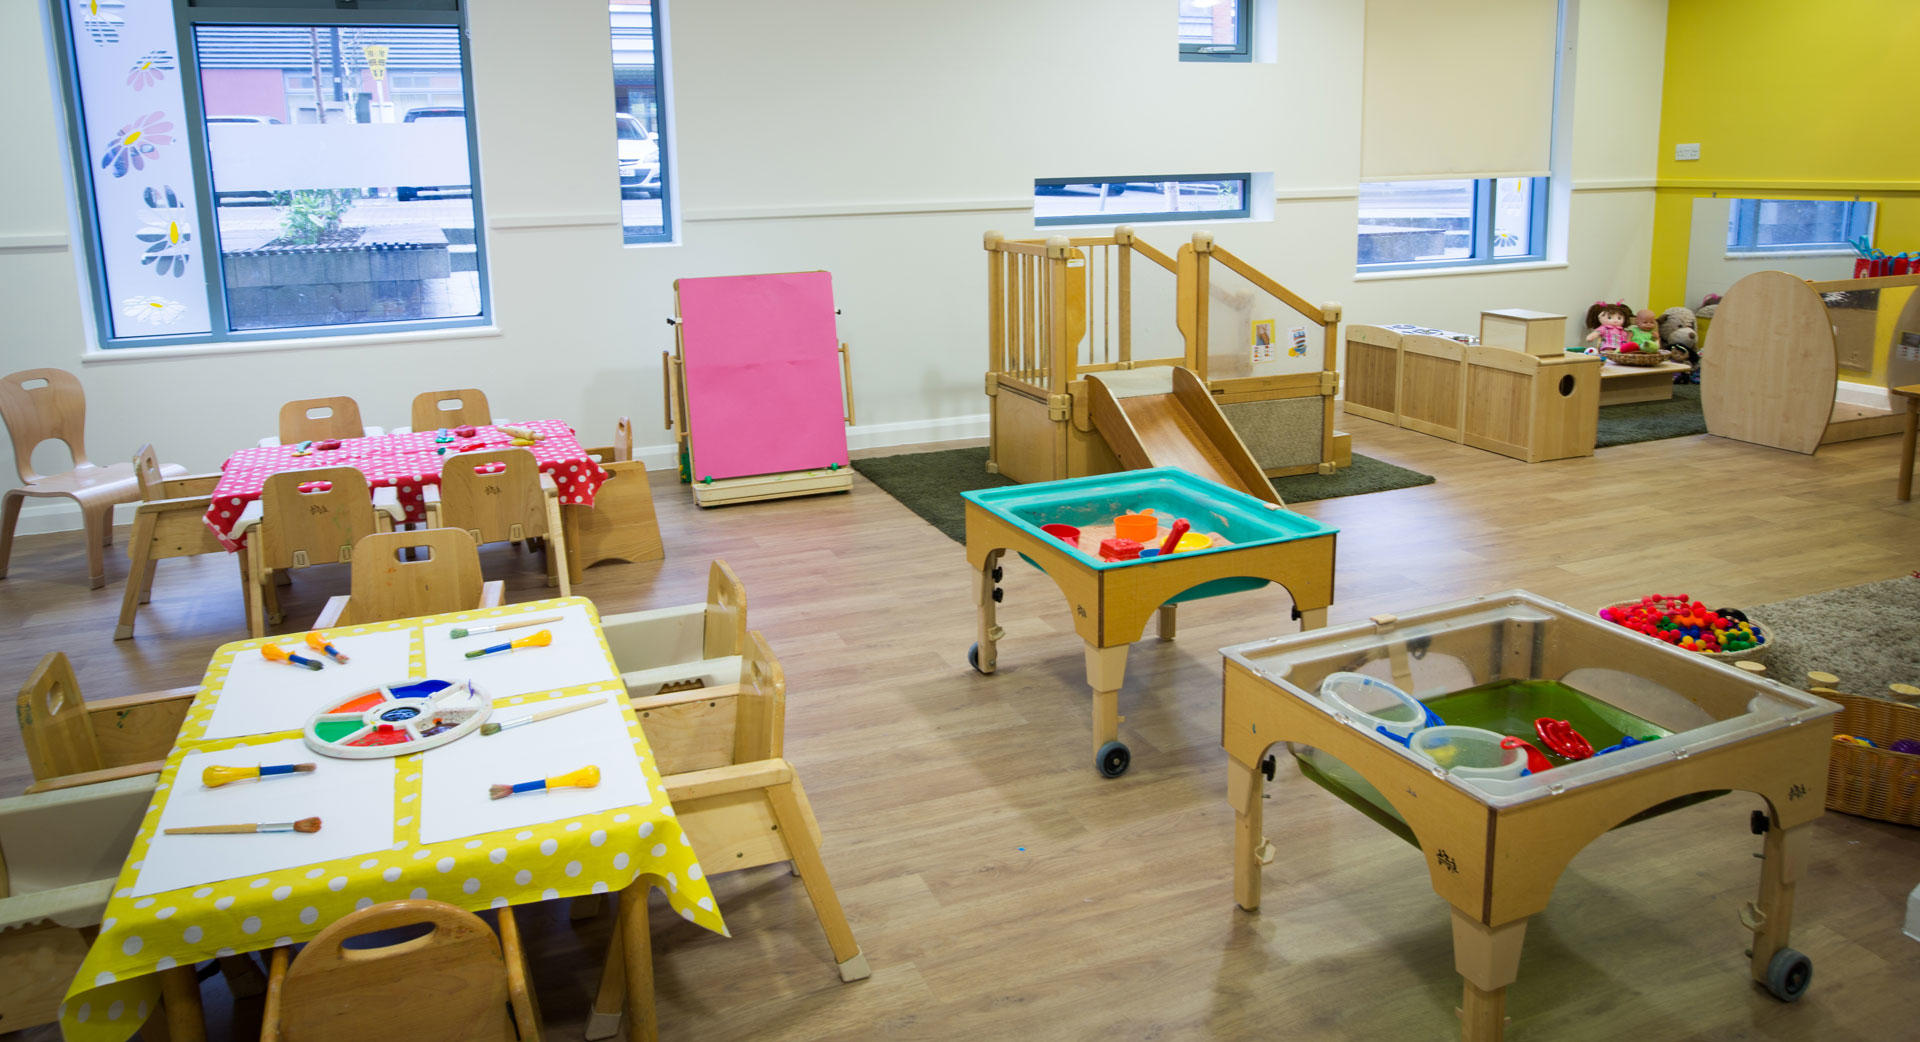 Bright Horizons Watford Day Nursery and Preschool Watford 03339 208876